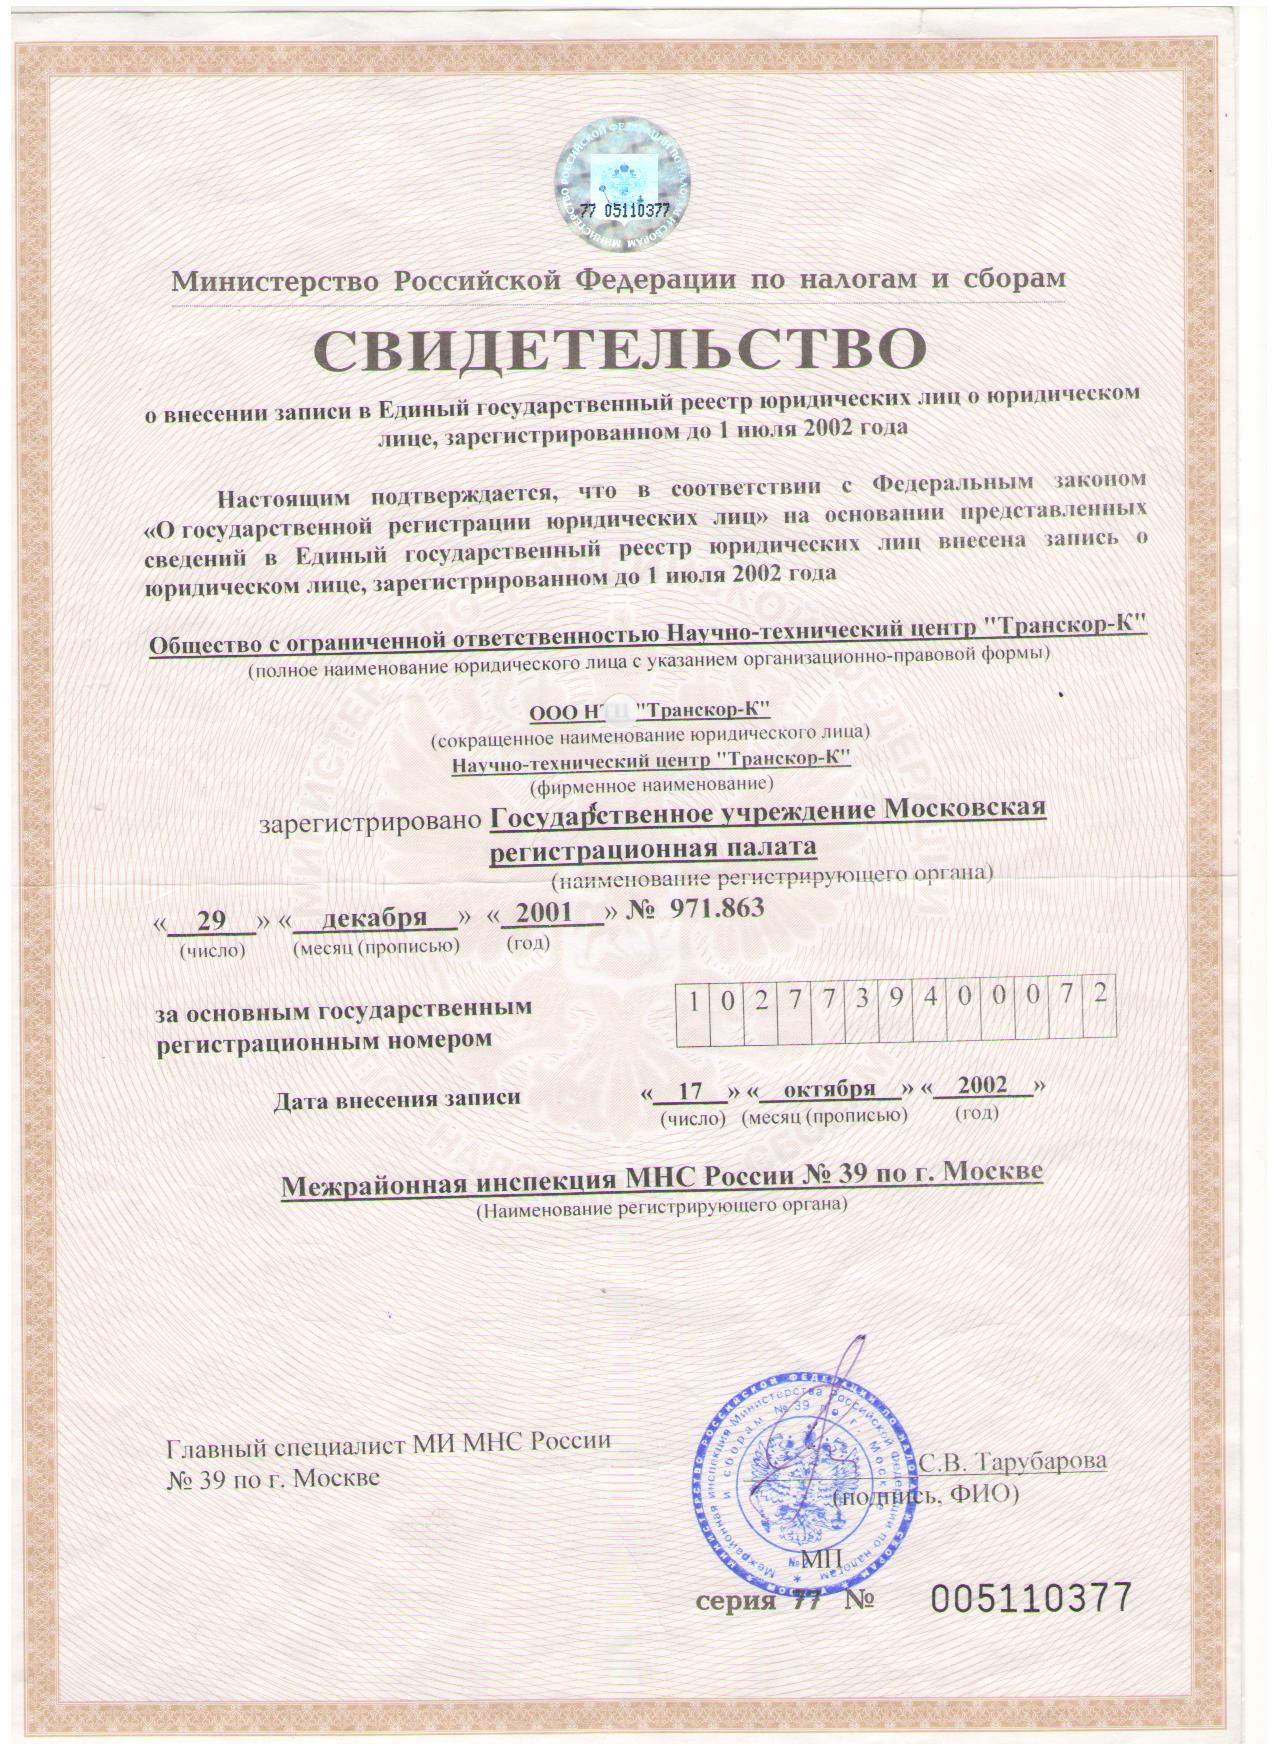 OGRN certificate about GOS. reg.Yul 77